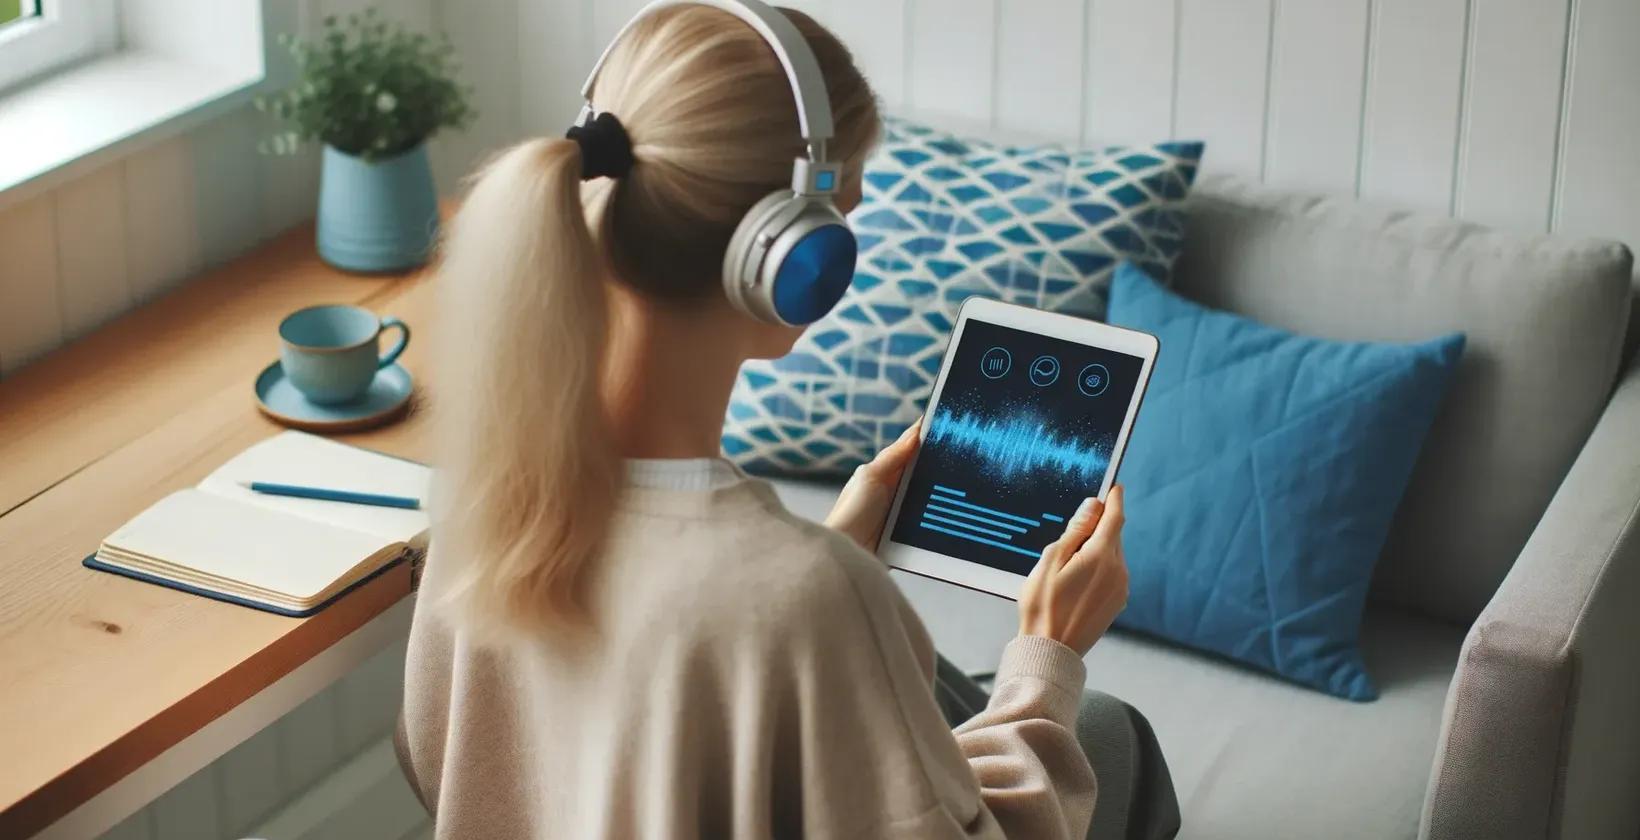 Konversi ucapan ke teks diisyaratkan oleh seorang wanita berambut pirang yang memakai headphone di dekat jendela, melihat bentuk gelombang pada tabletnya.